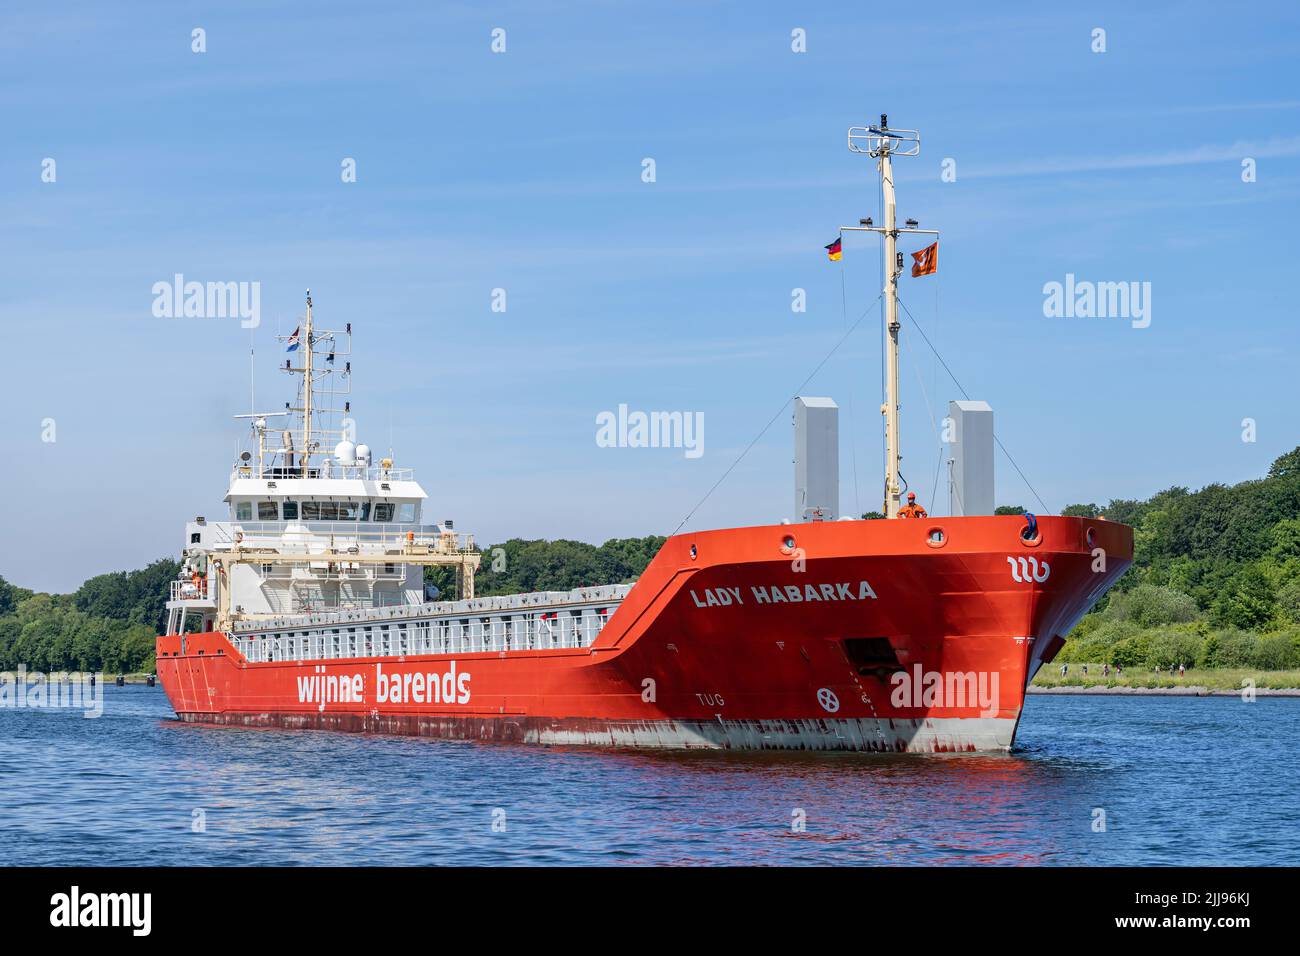 Wijnne Barends general cargo vessel LADY HARBAKA in the Kiel Canal Stock Photo